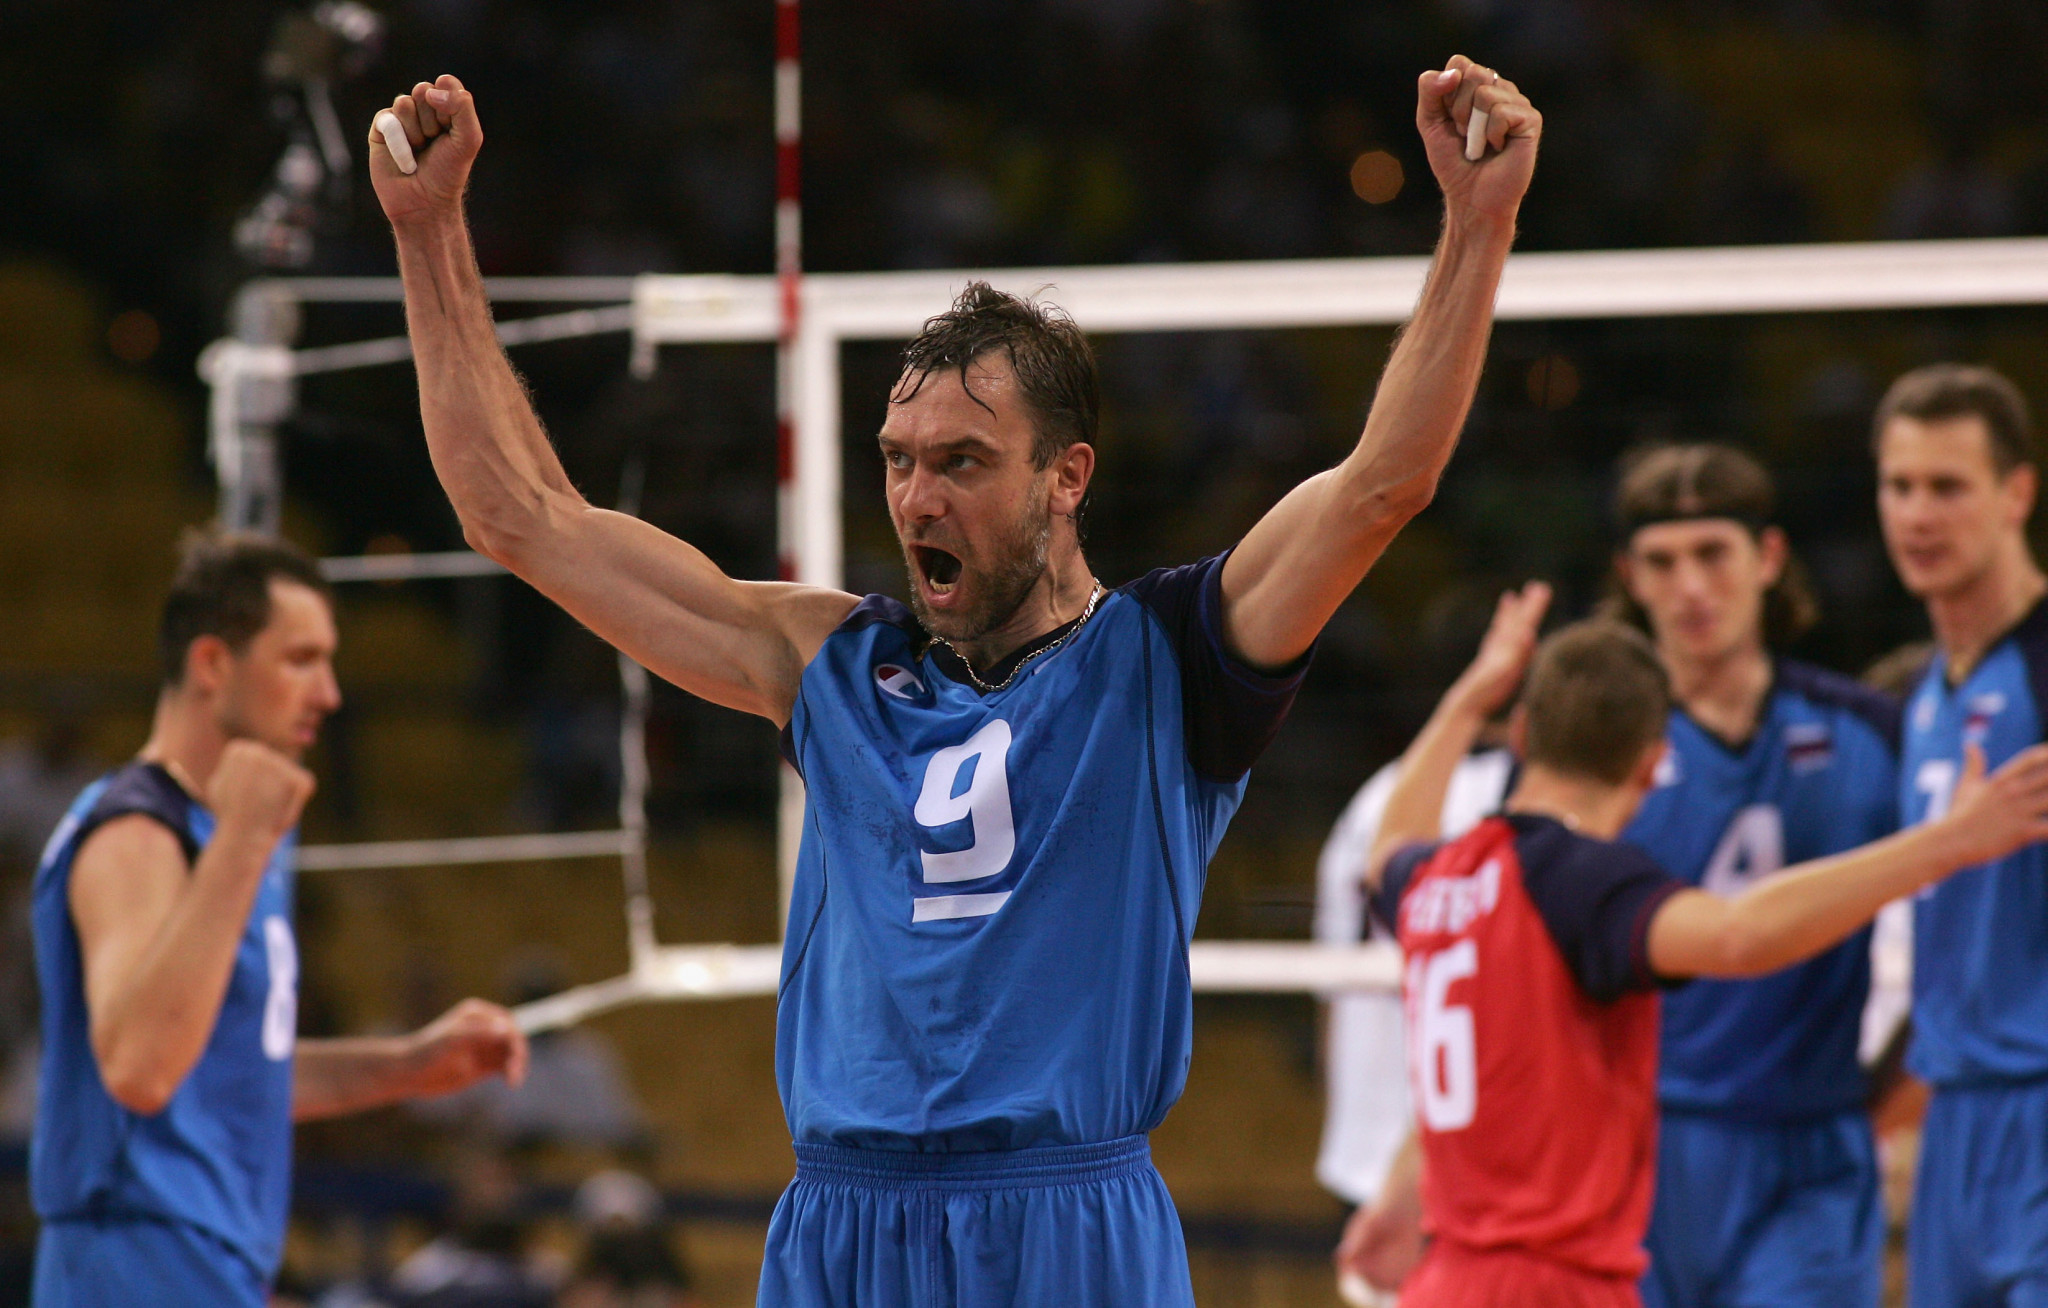 Vadim Khamuttskikh won medals at three Olympic Games ©Getty Images